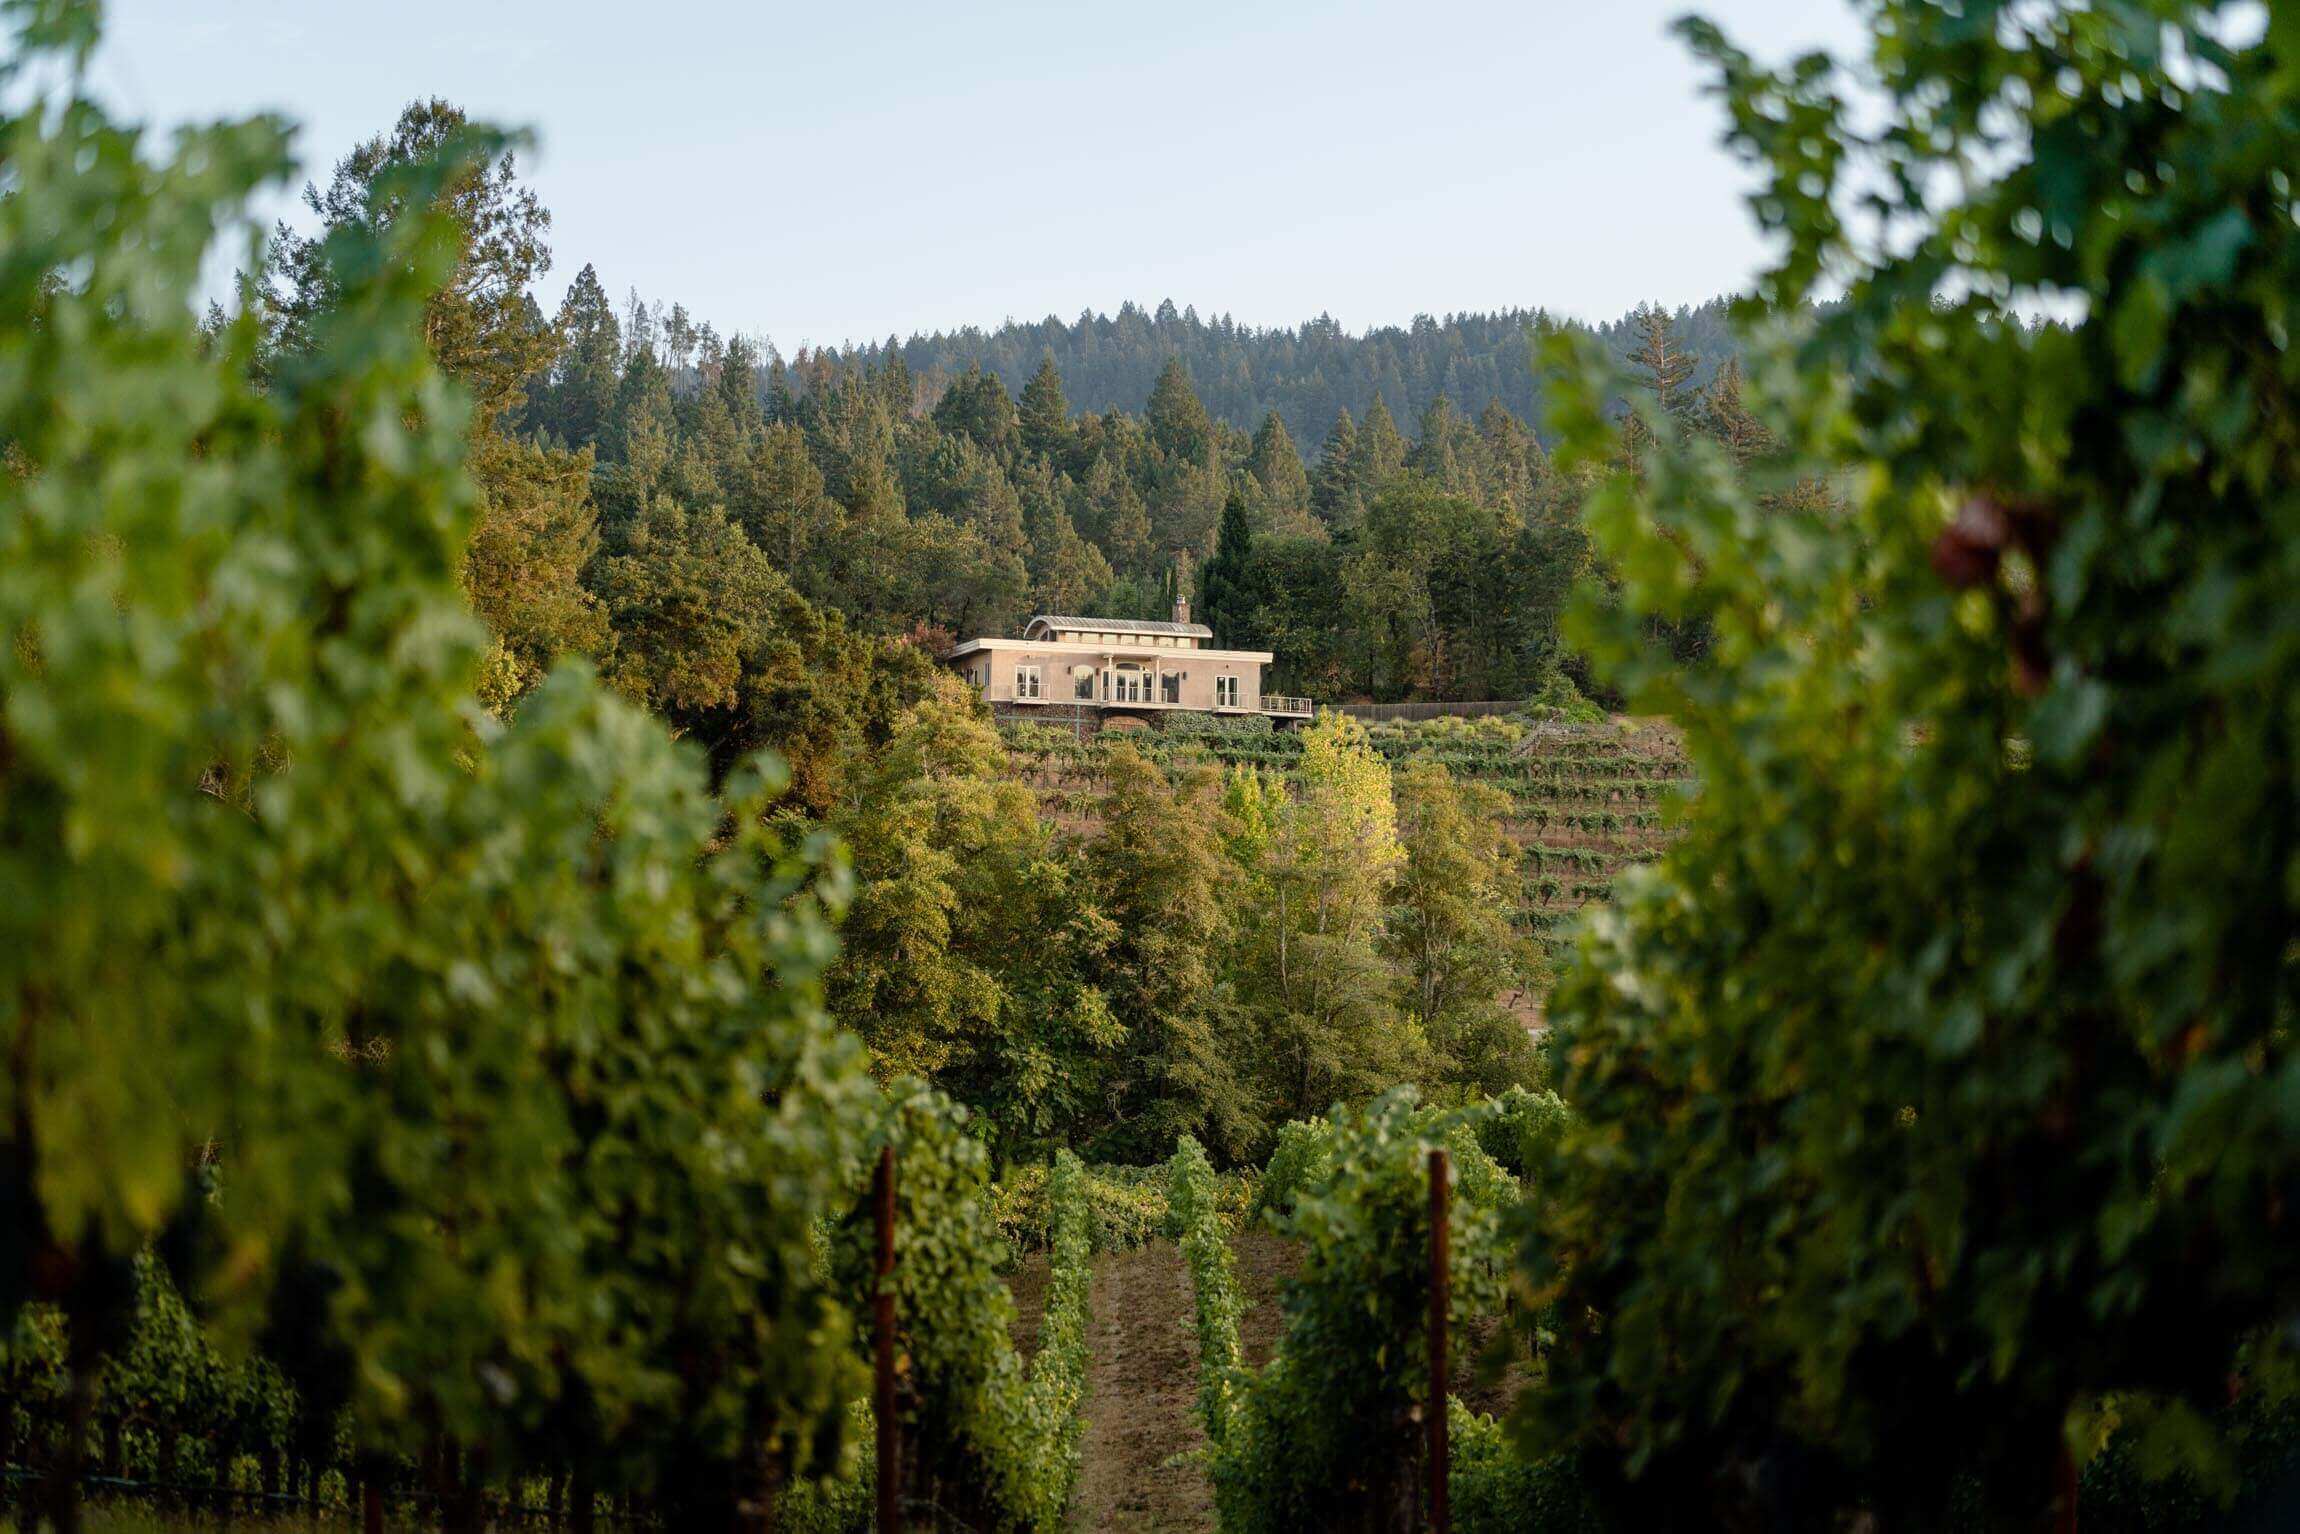 View of Diamond Creek Winery from vineyard